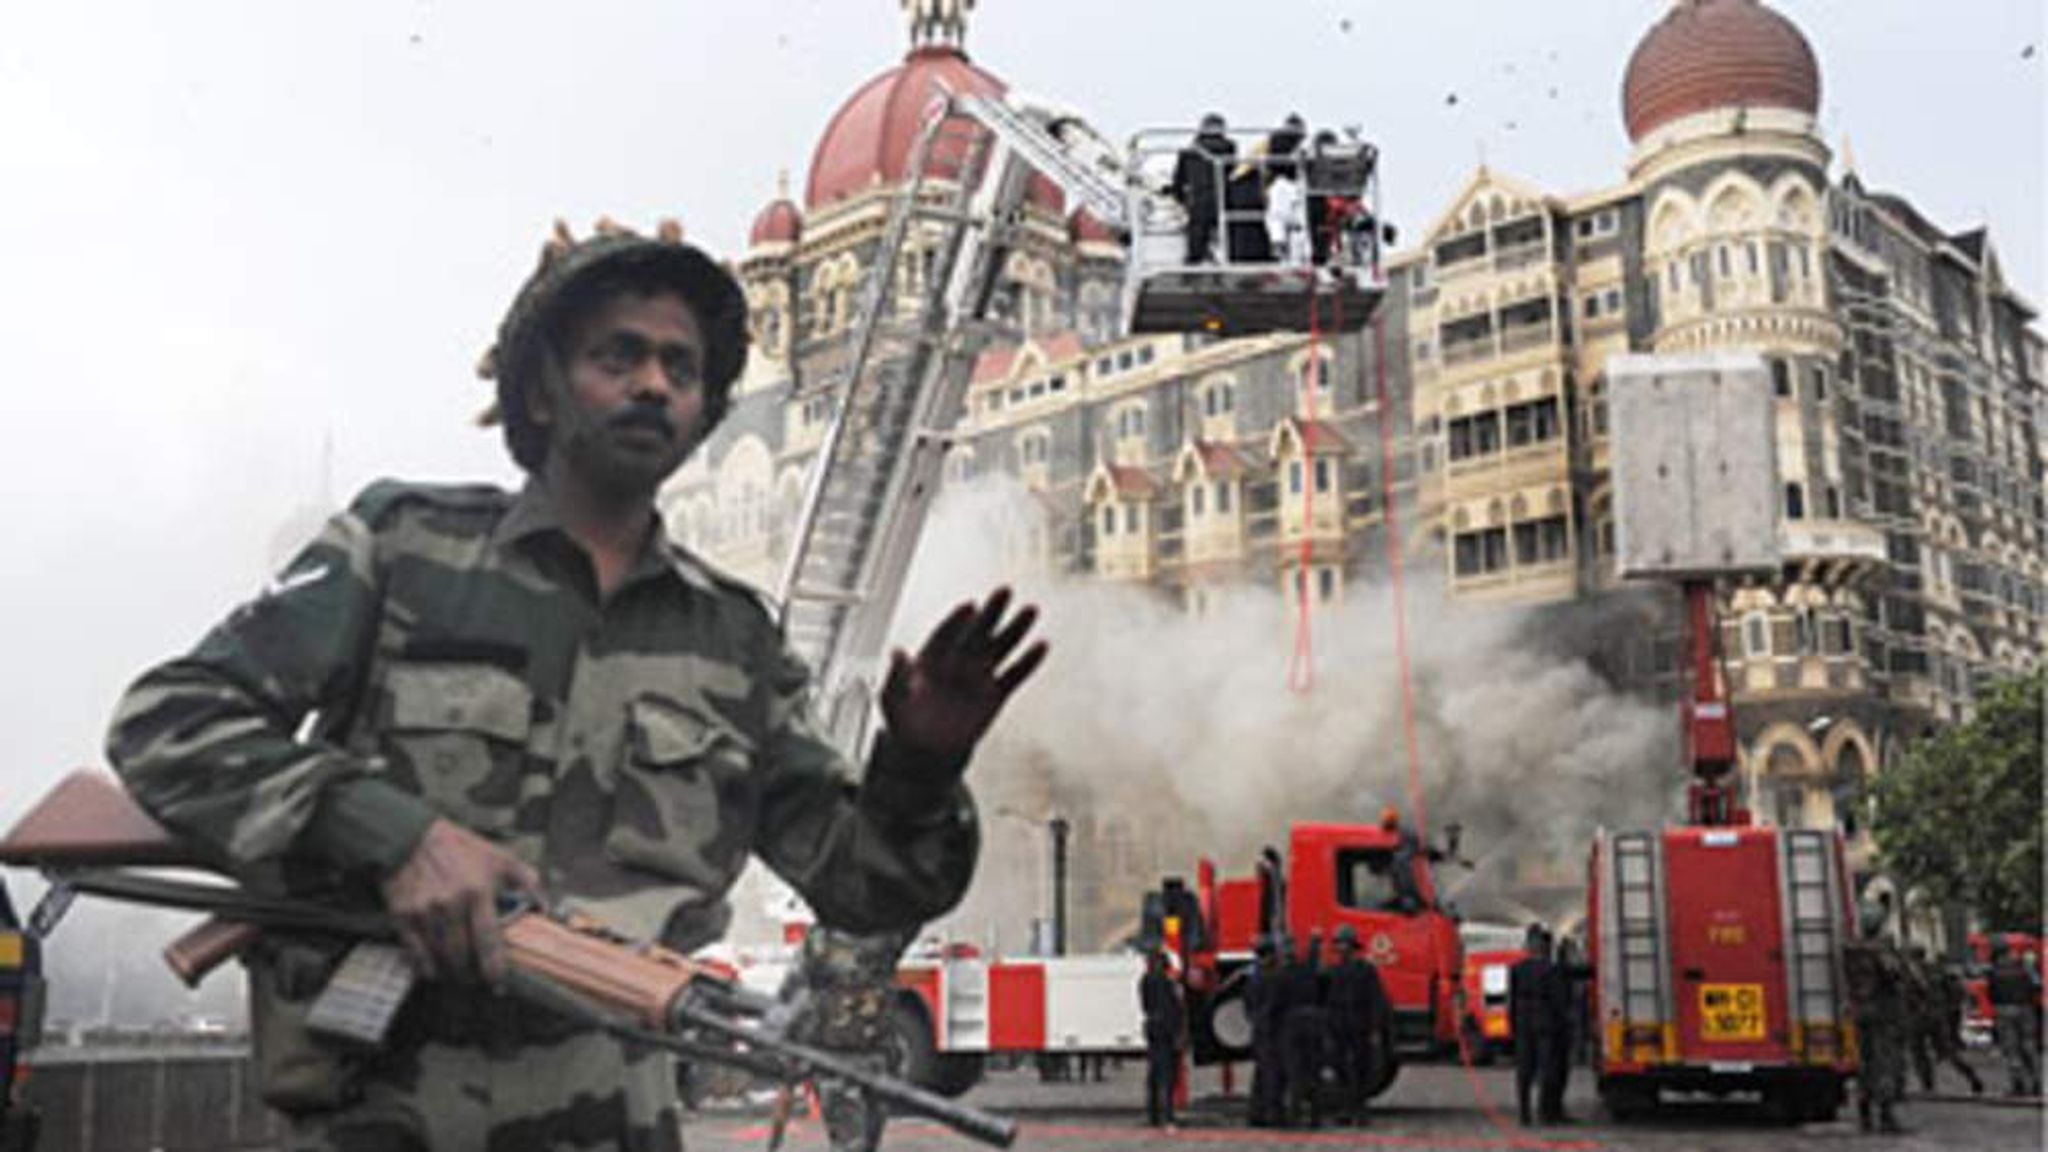 Нападение на мумбаи. Мумбаи 2008 Тадж Махал теракт. Отель Мумбаи теракт 2008. Теракт в Индии 2008 Тадж Махал. Теракт в Индии 2008 отель Тадж Махал.